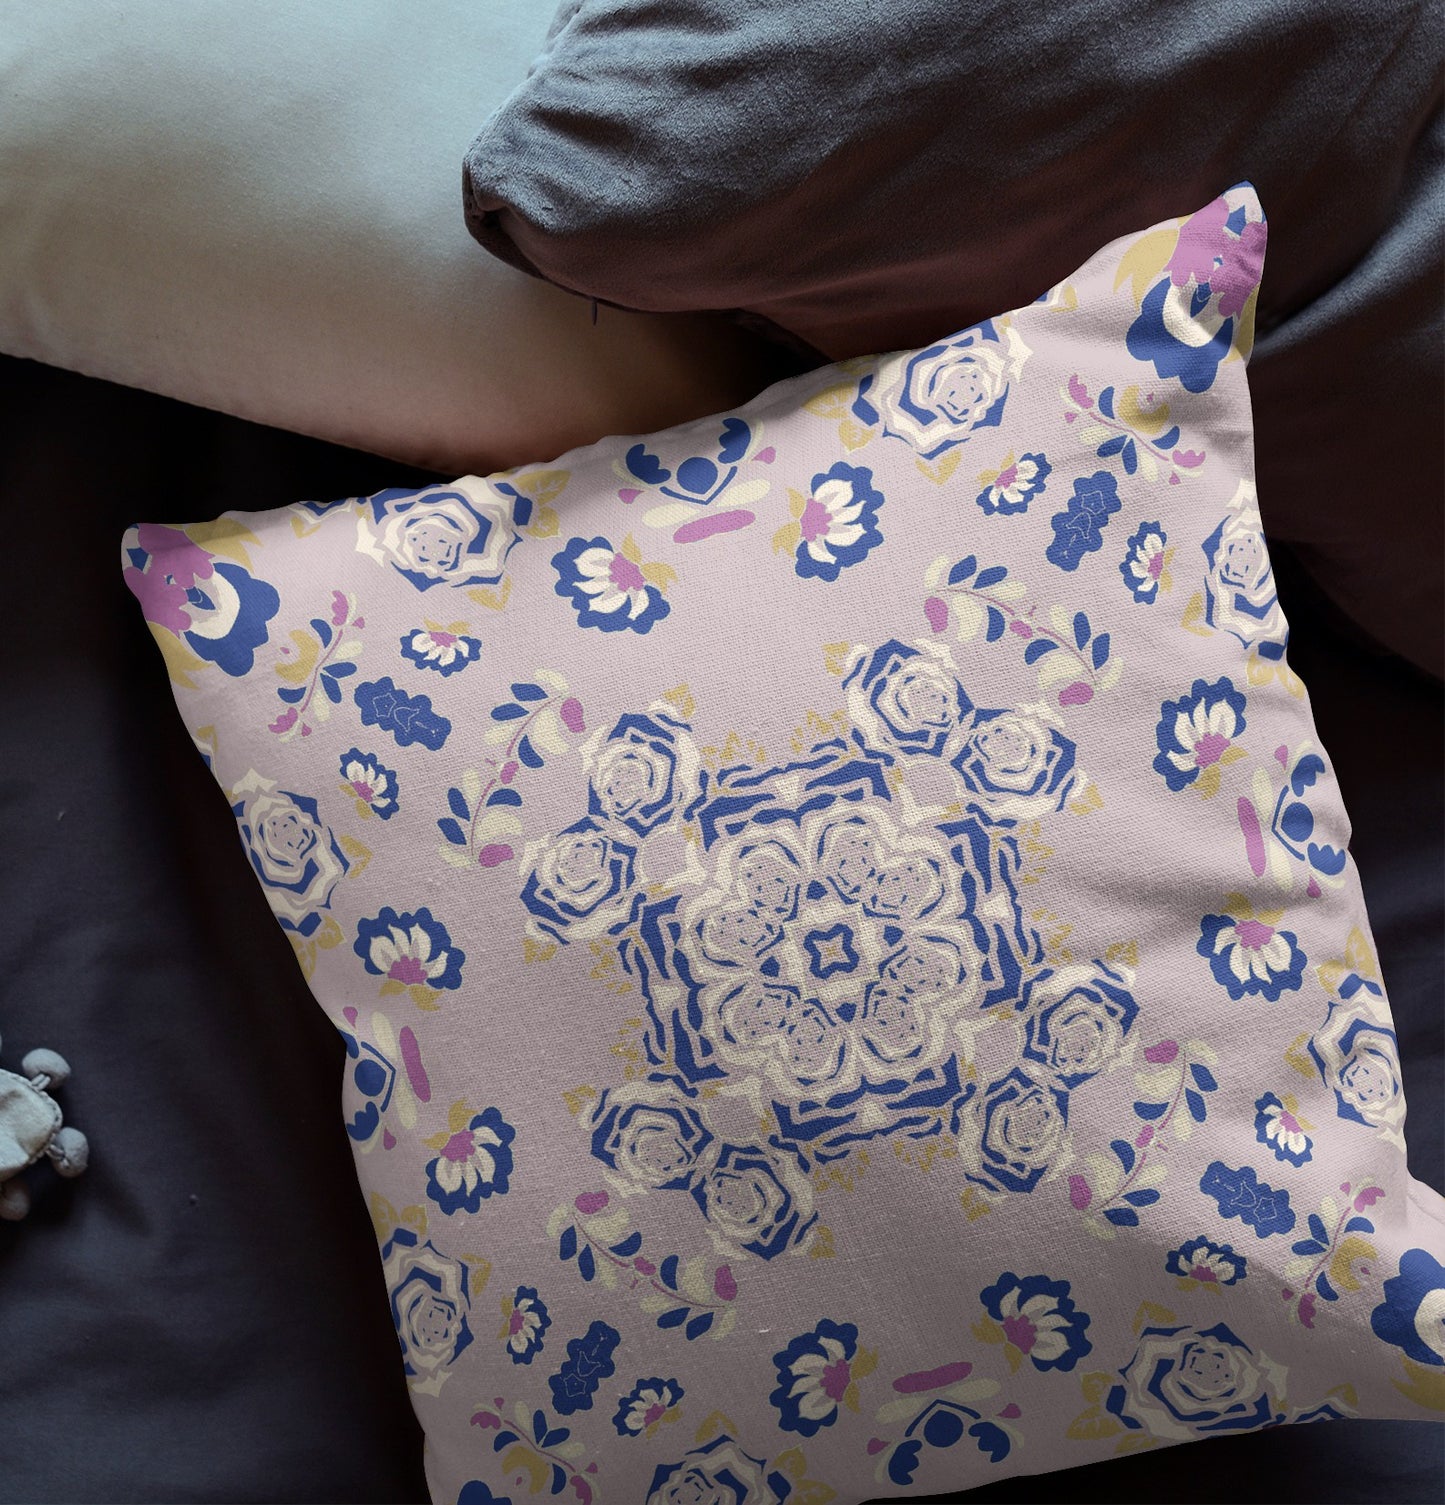 16” Lavender Blue Wreath Indoor Outdoor Zippered Throw Pillow